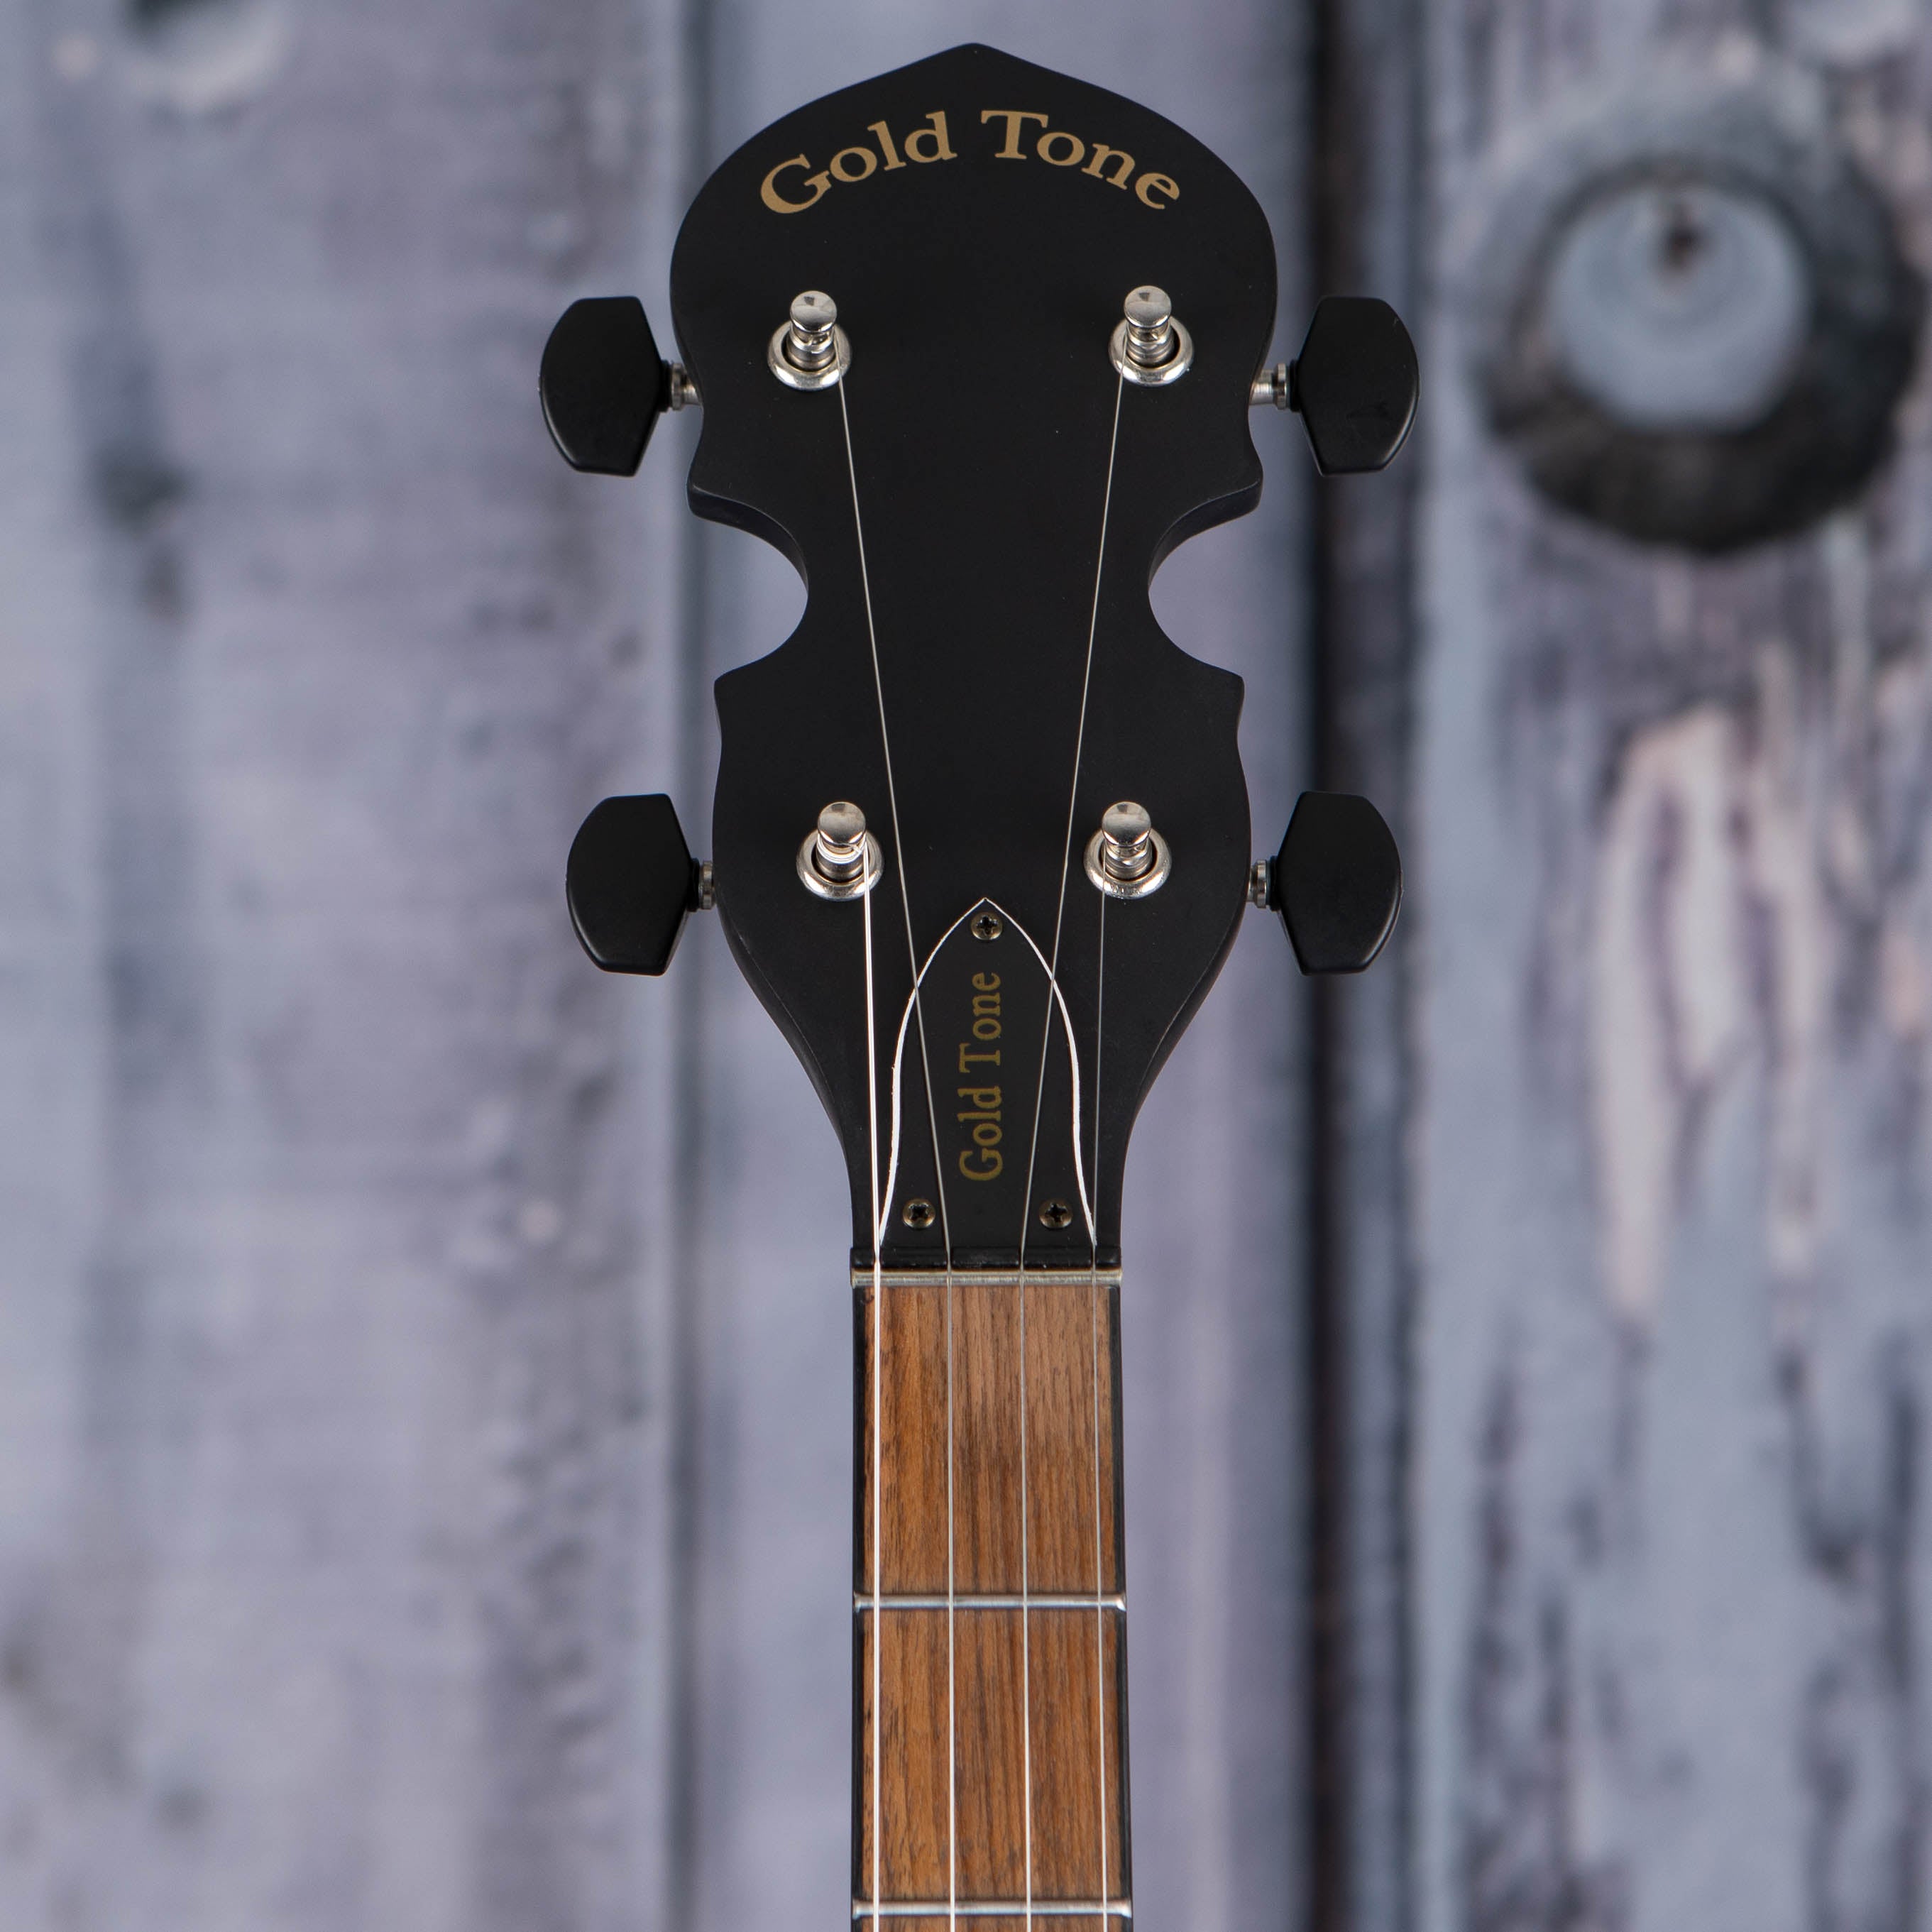 Gold Tone AC-1 Acoustic Composite Banjo, Satin Black, front headstock